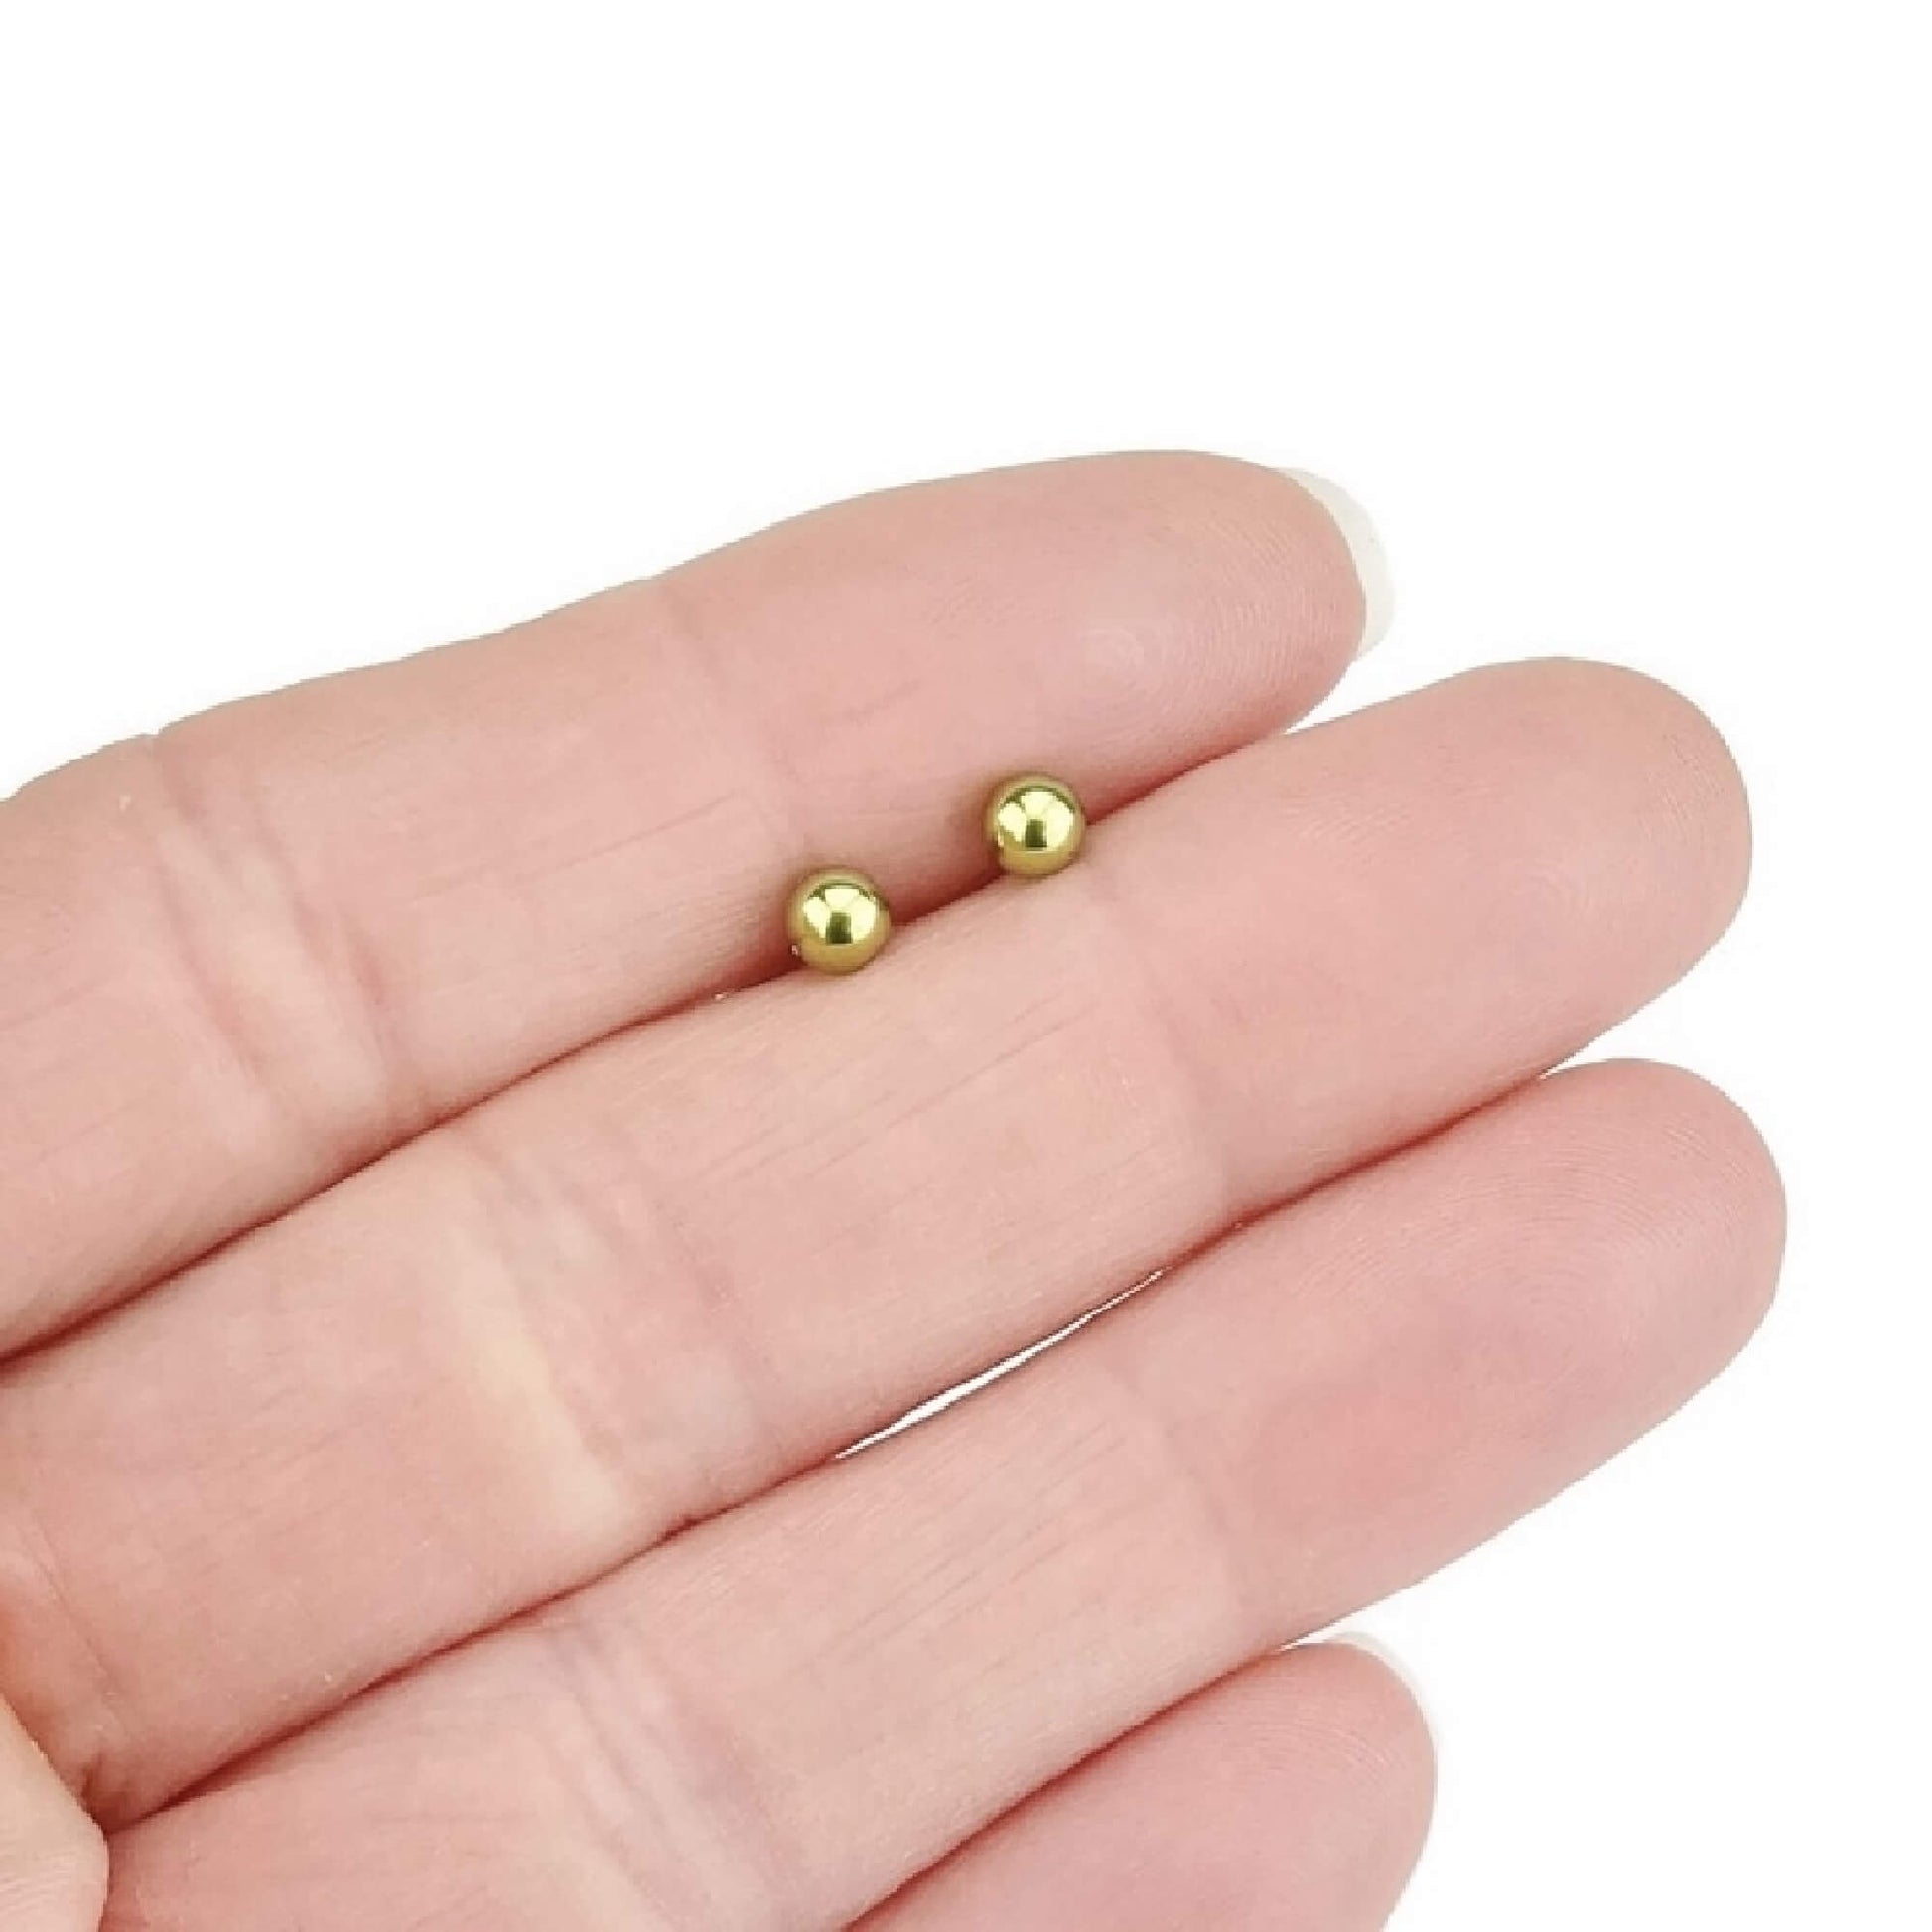 Gold Titanium Post Earrings 4mm Ball Studs